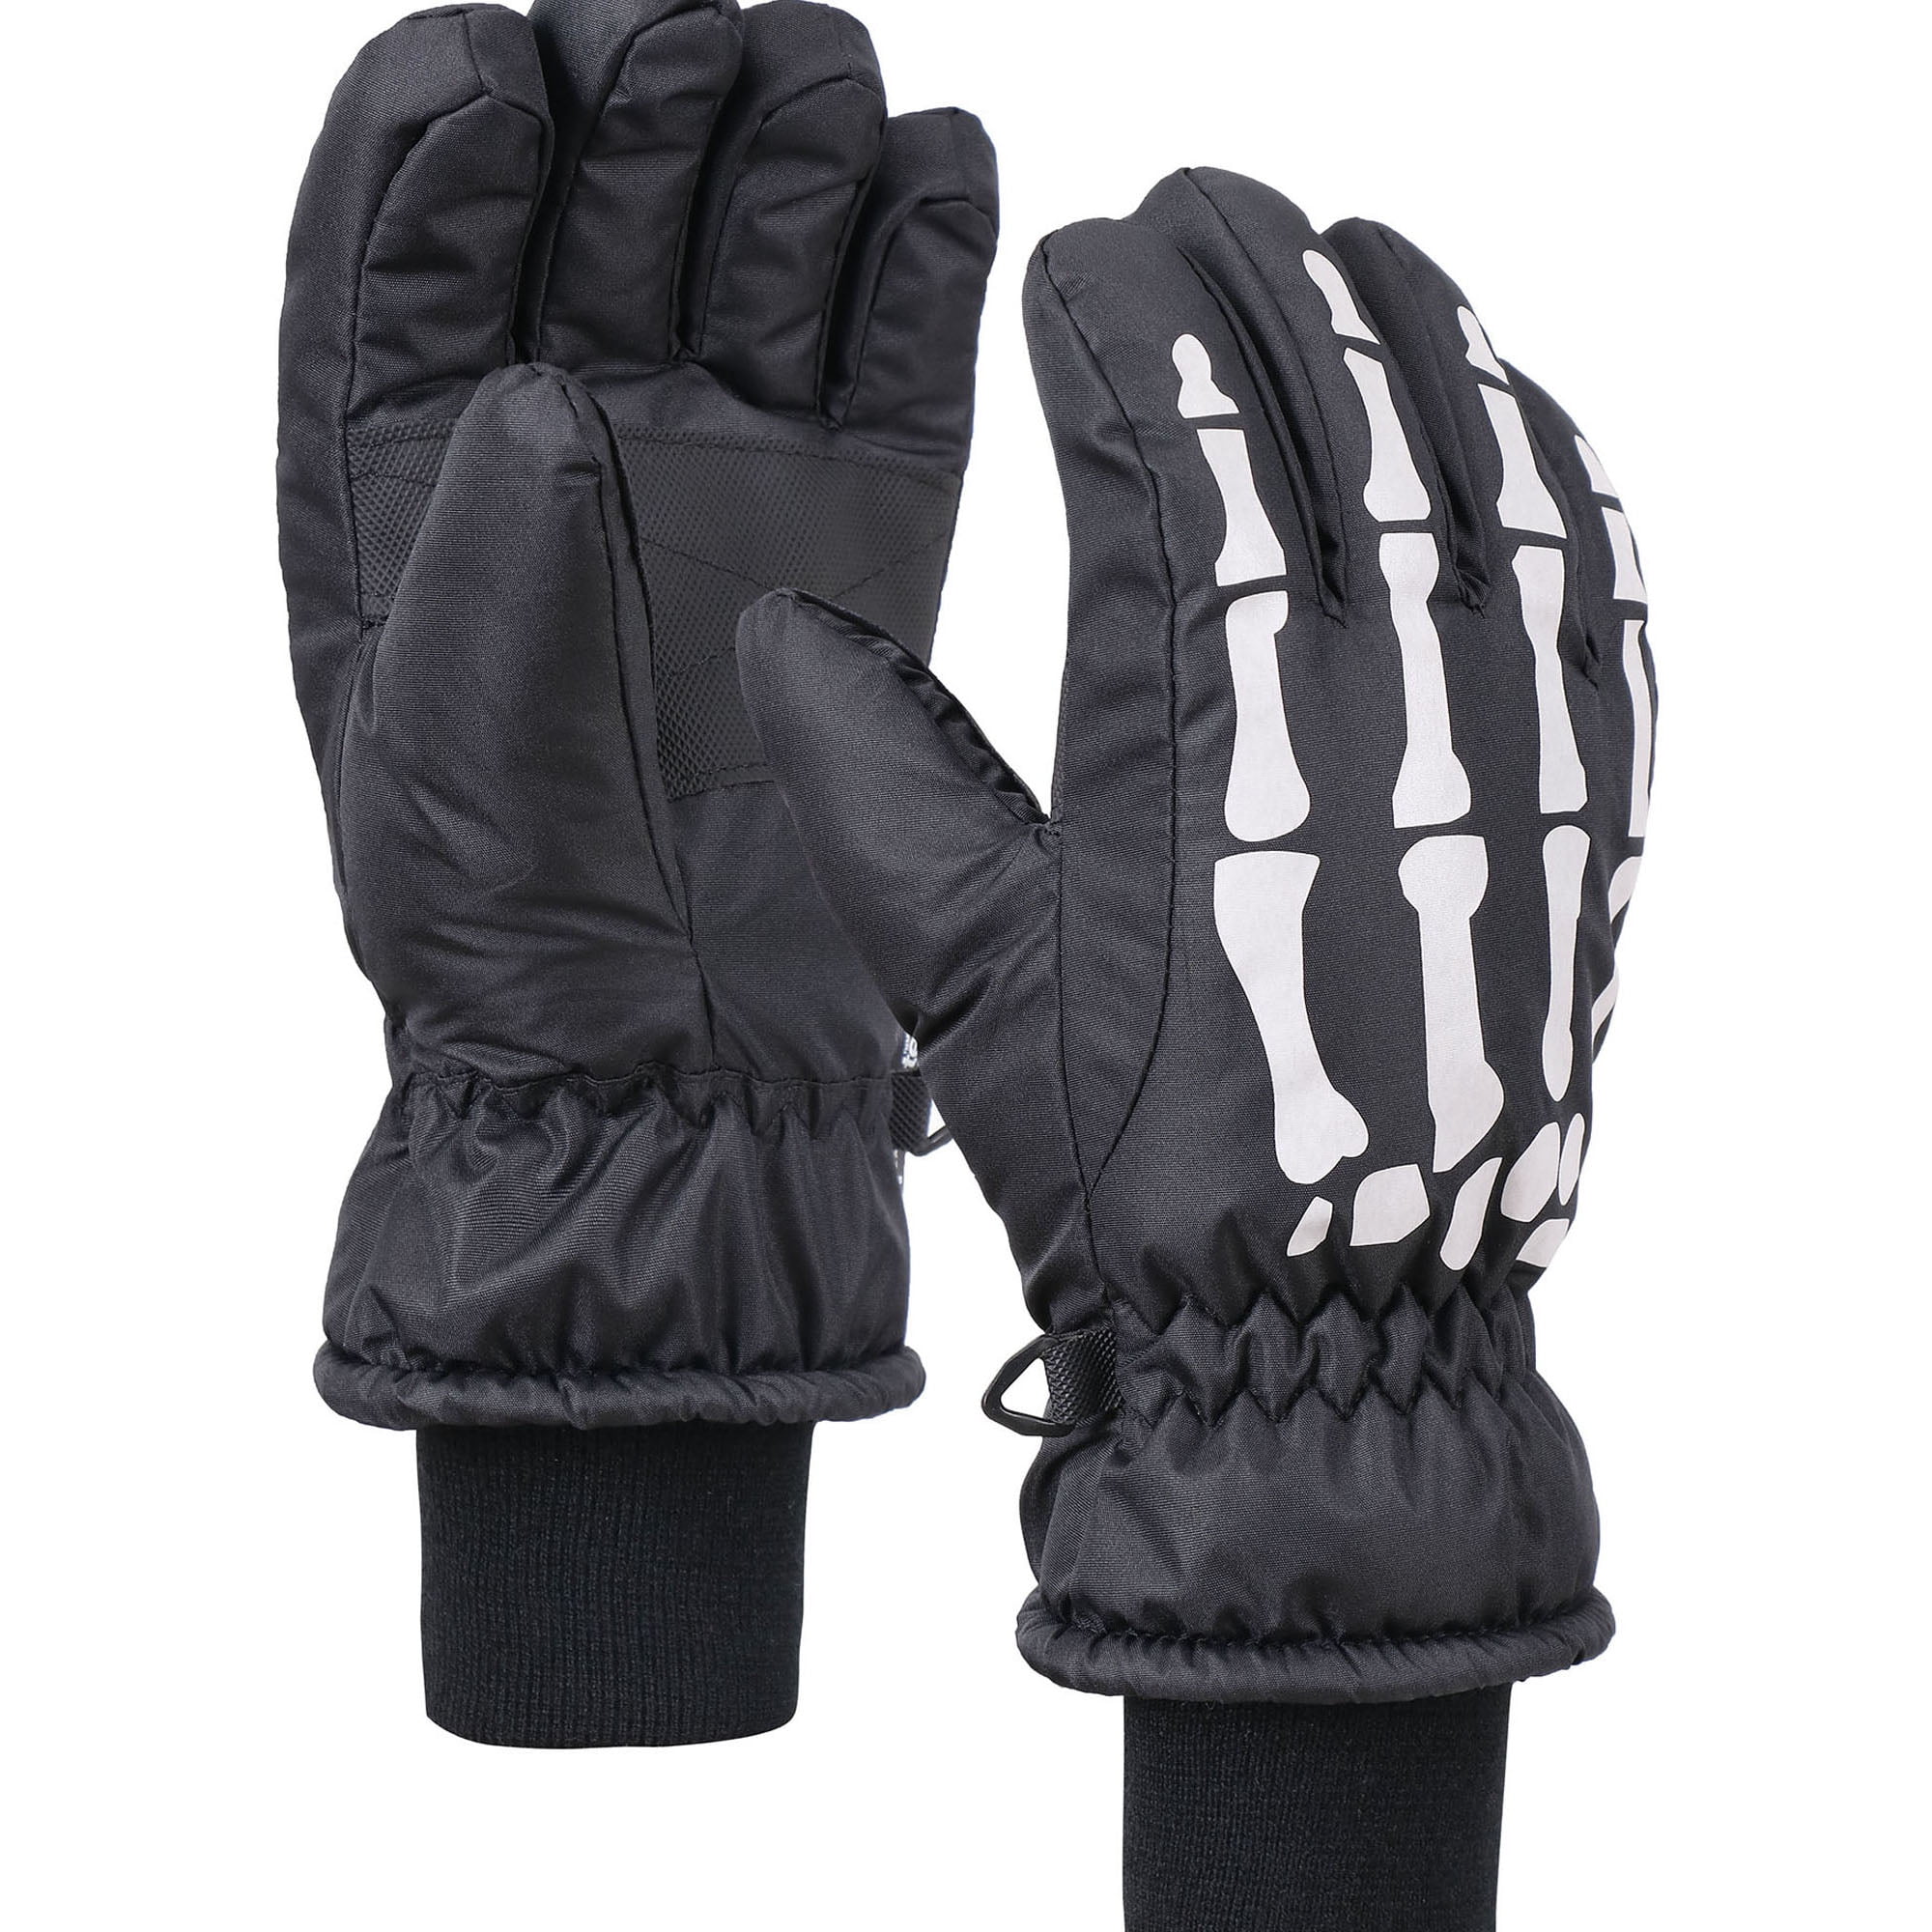 Boys Winter Snow Thinsulate Waterproof Skeleton Ski Gloves 